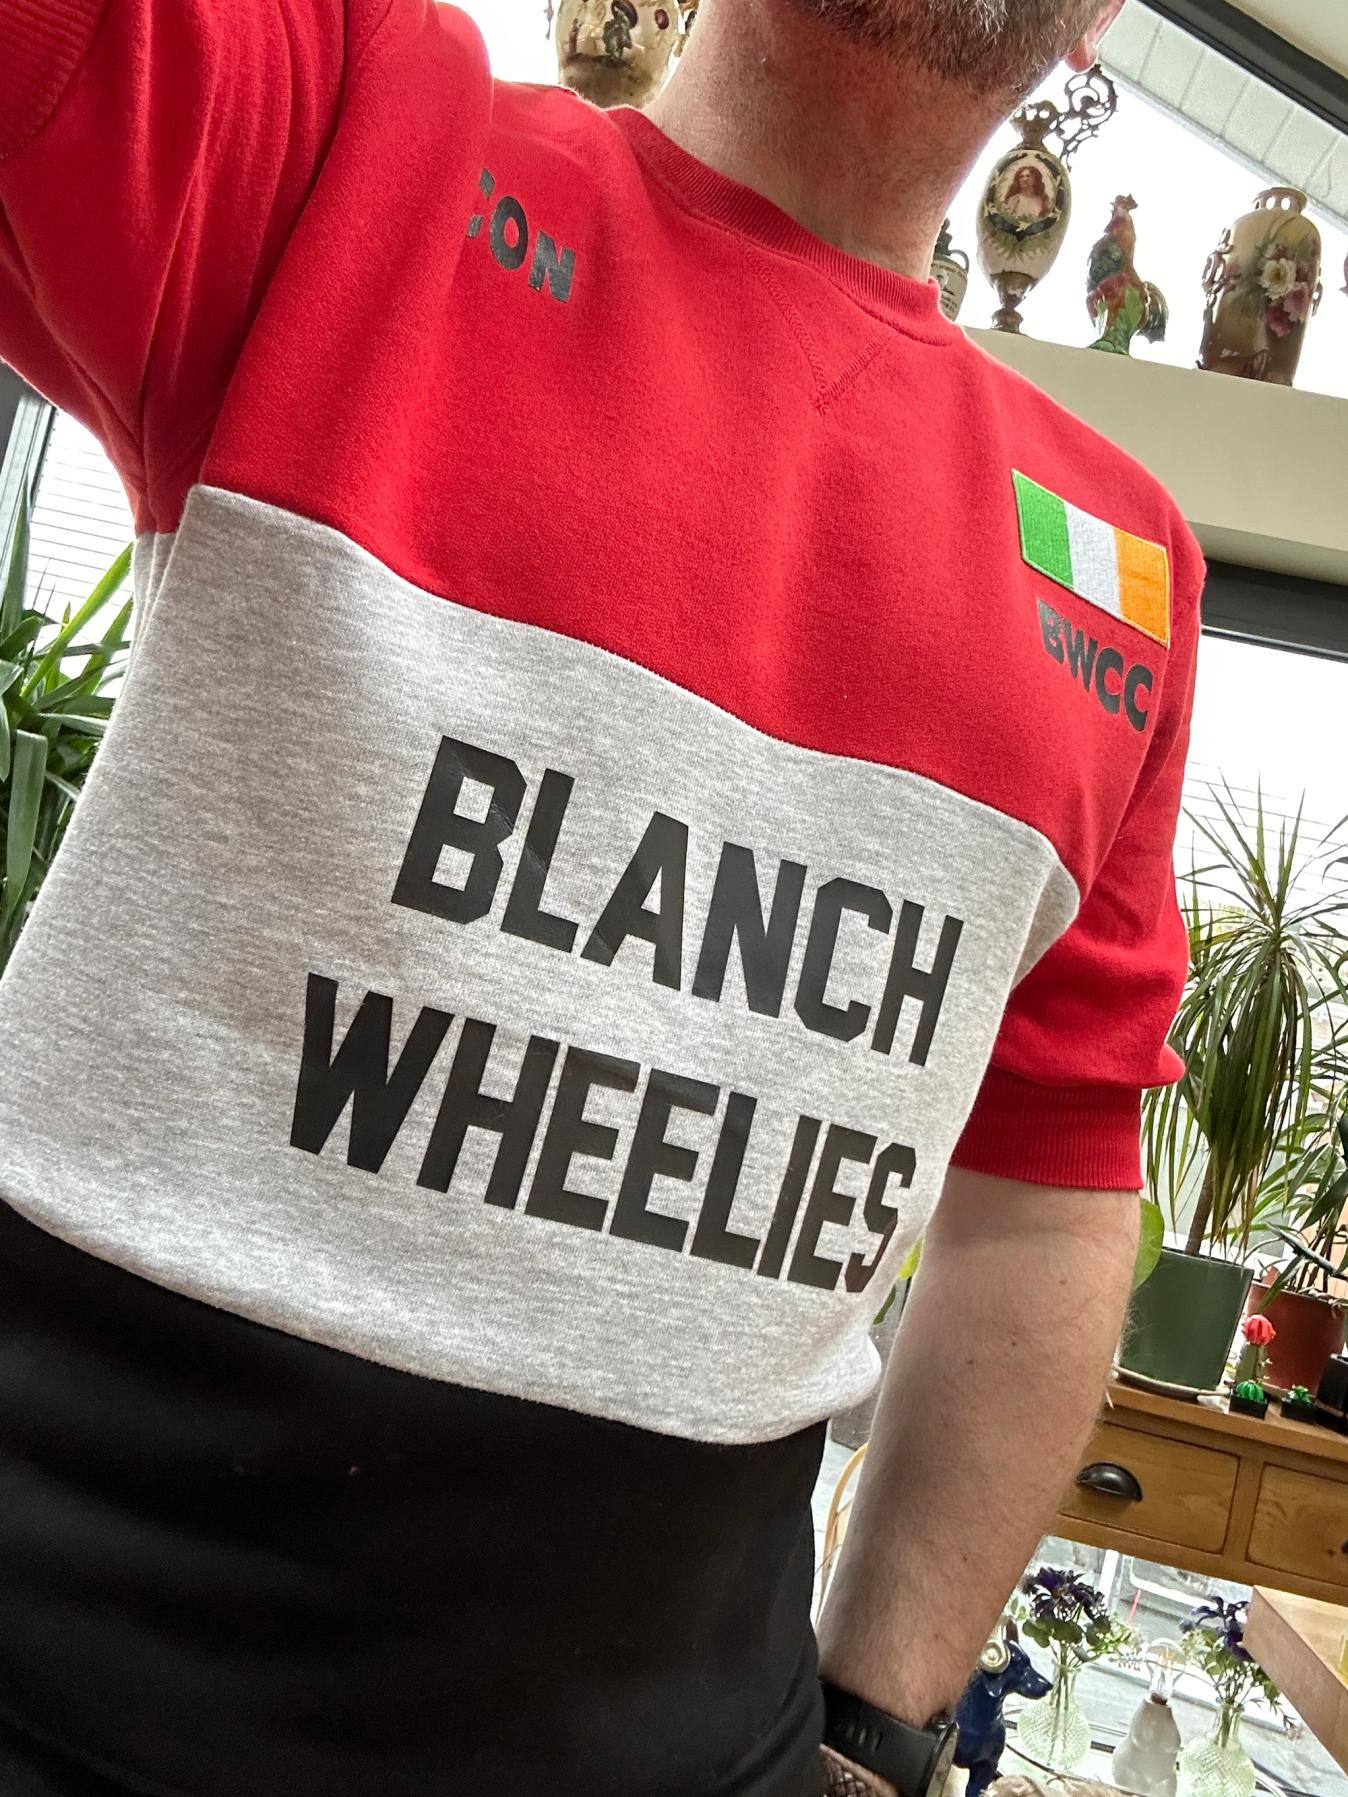 custom designed club sweatshirt for Blanch Wheelies